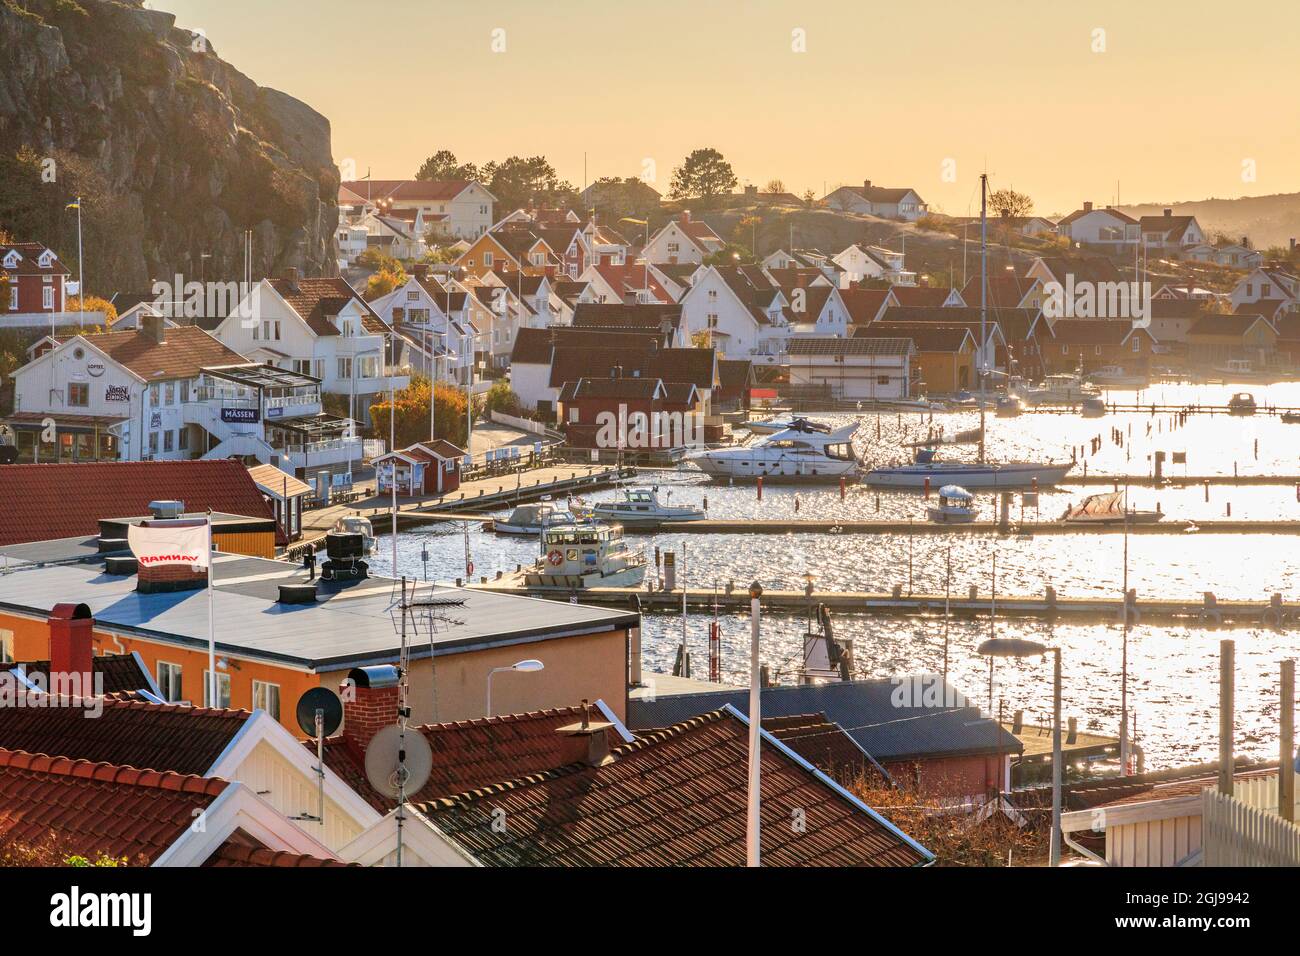 Sweden, Vastra Gotaland County, Tanum municipality, Fjallbacka. Summer tourist resort with maritime history. Stock Photo